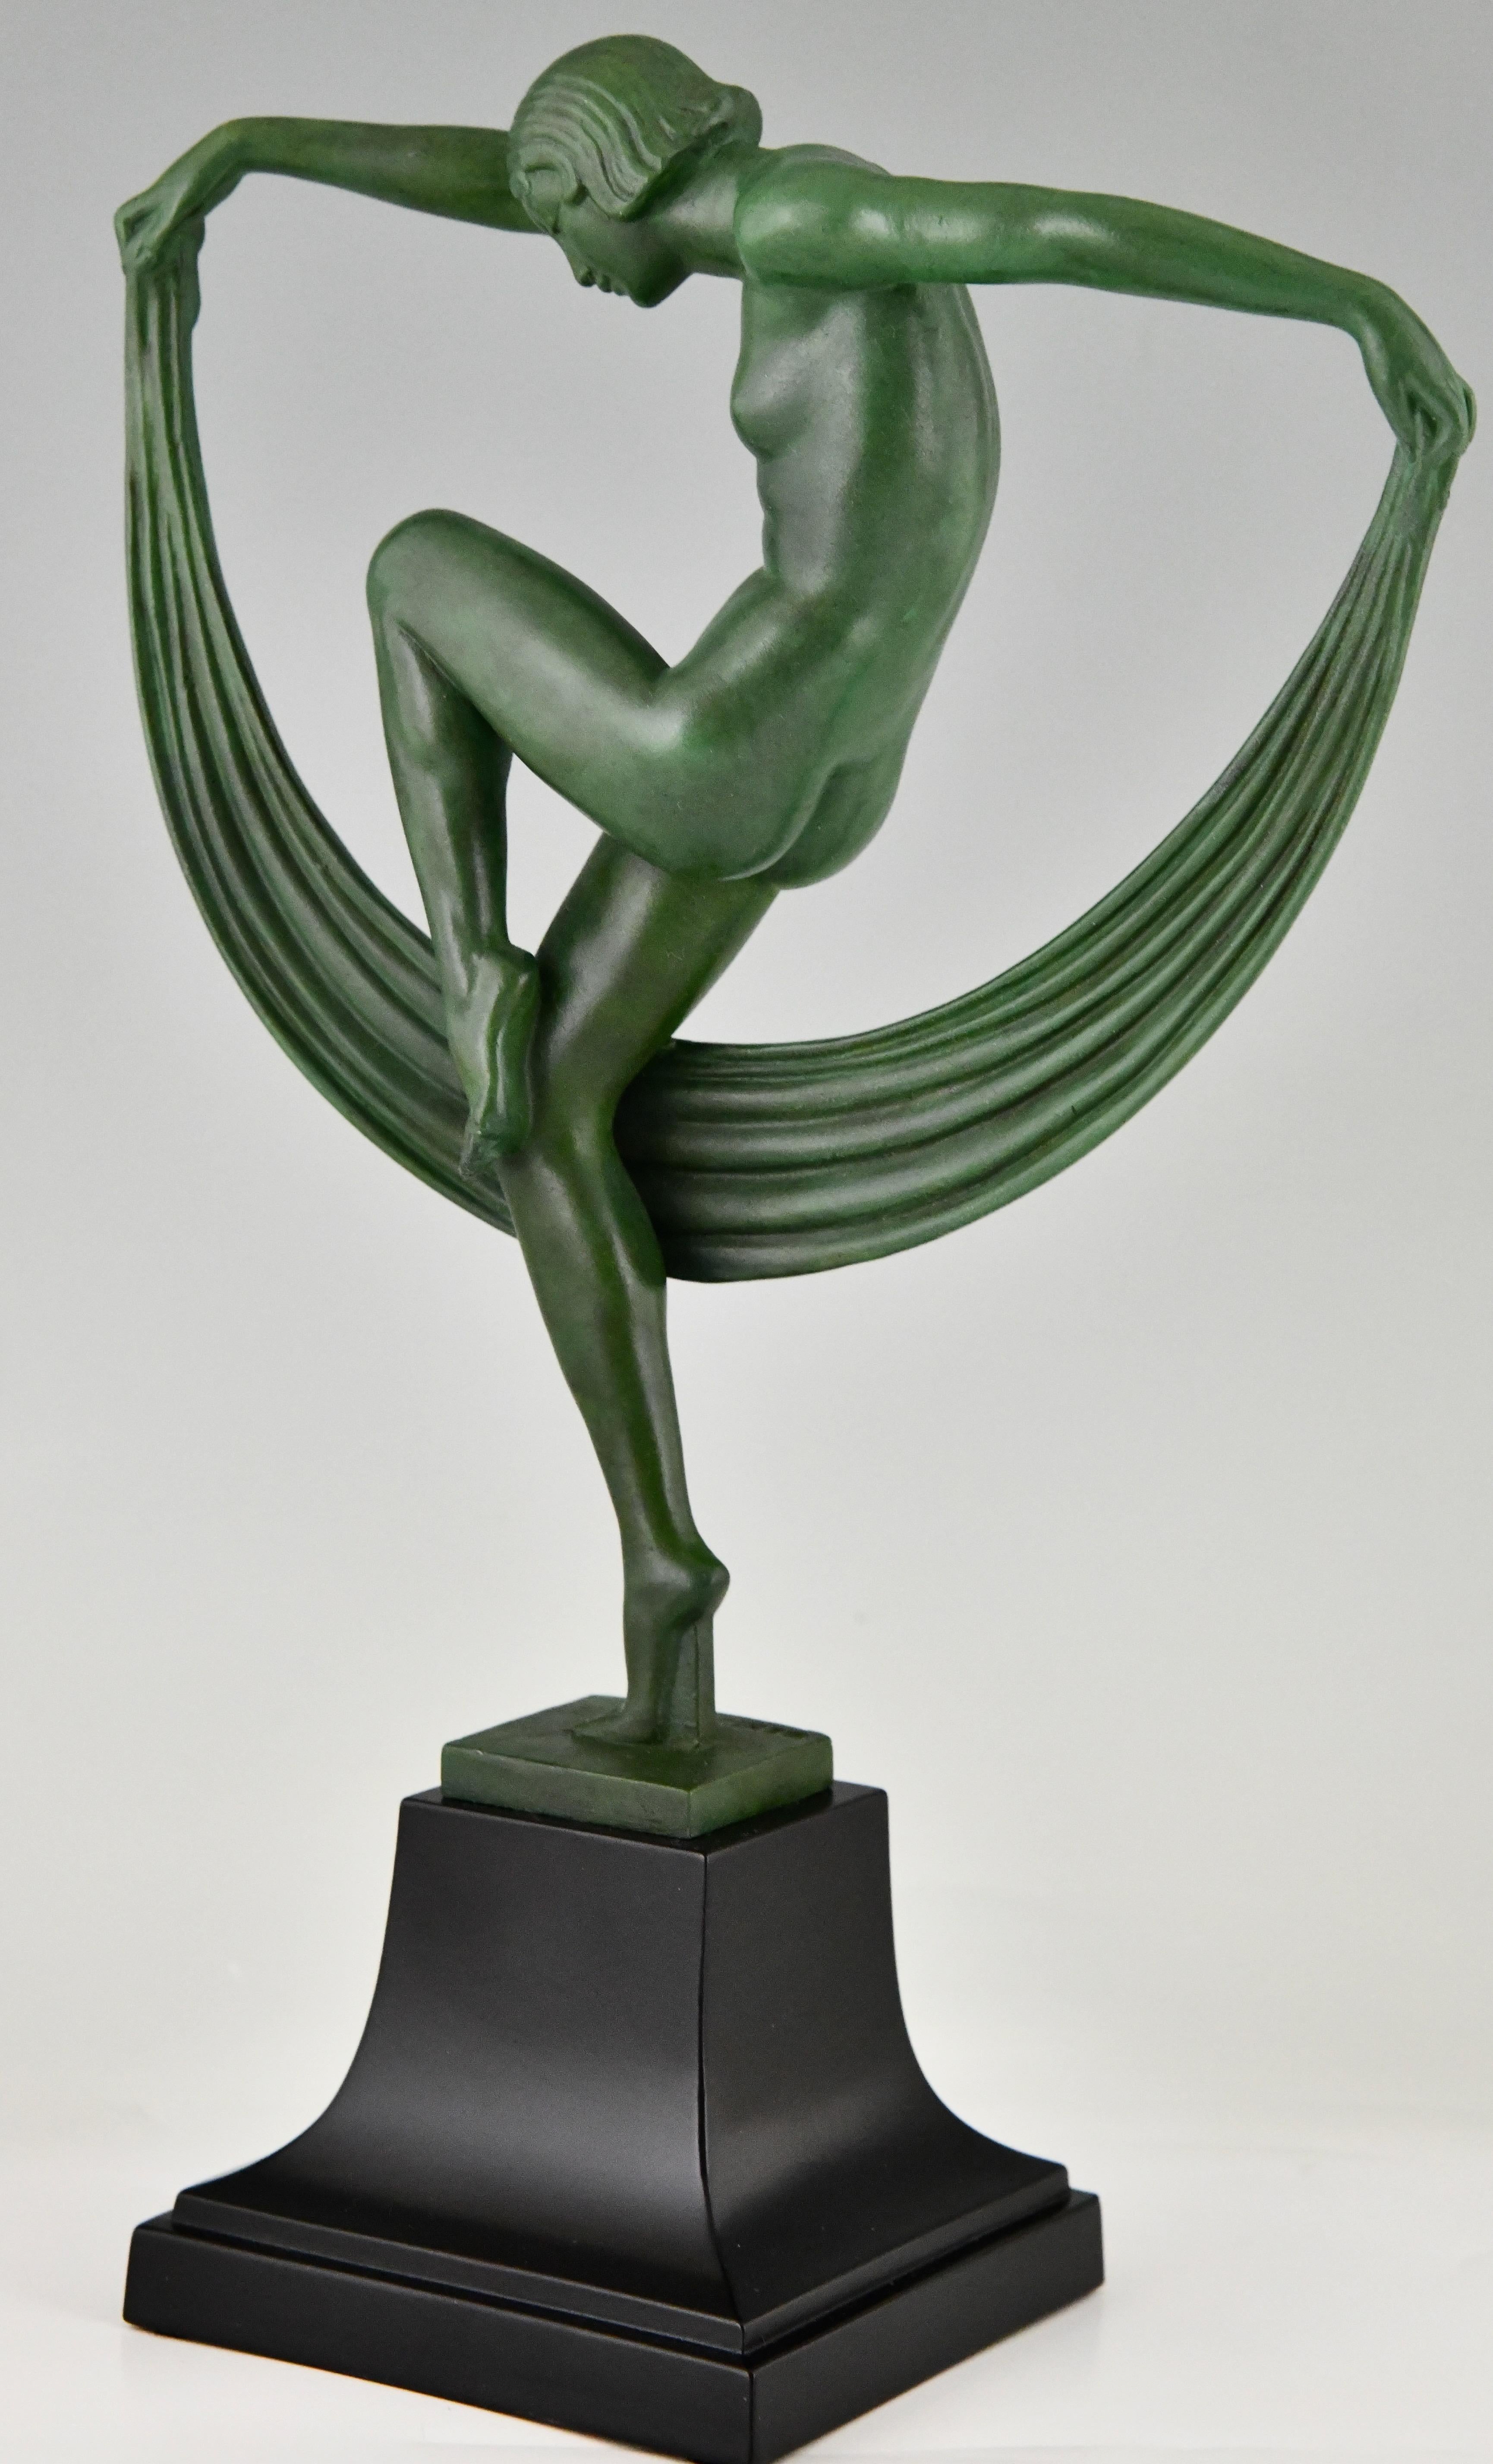 Art Deco sculpture Folie nude scarf dancer by Denis for Max le Verrier 1